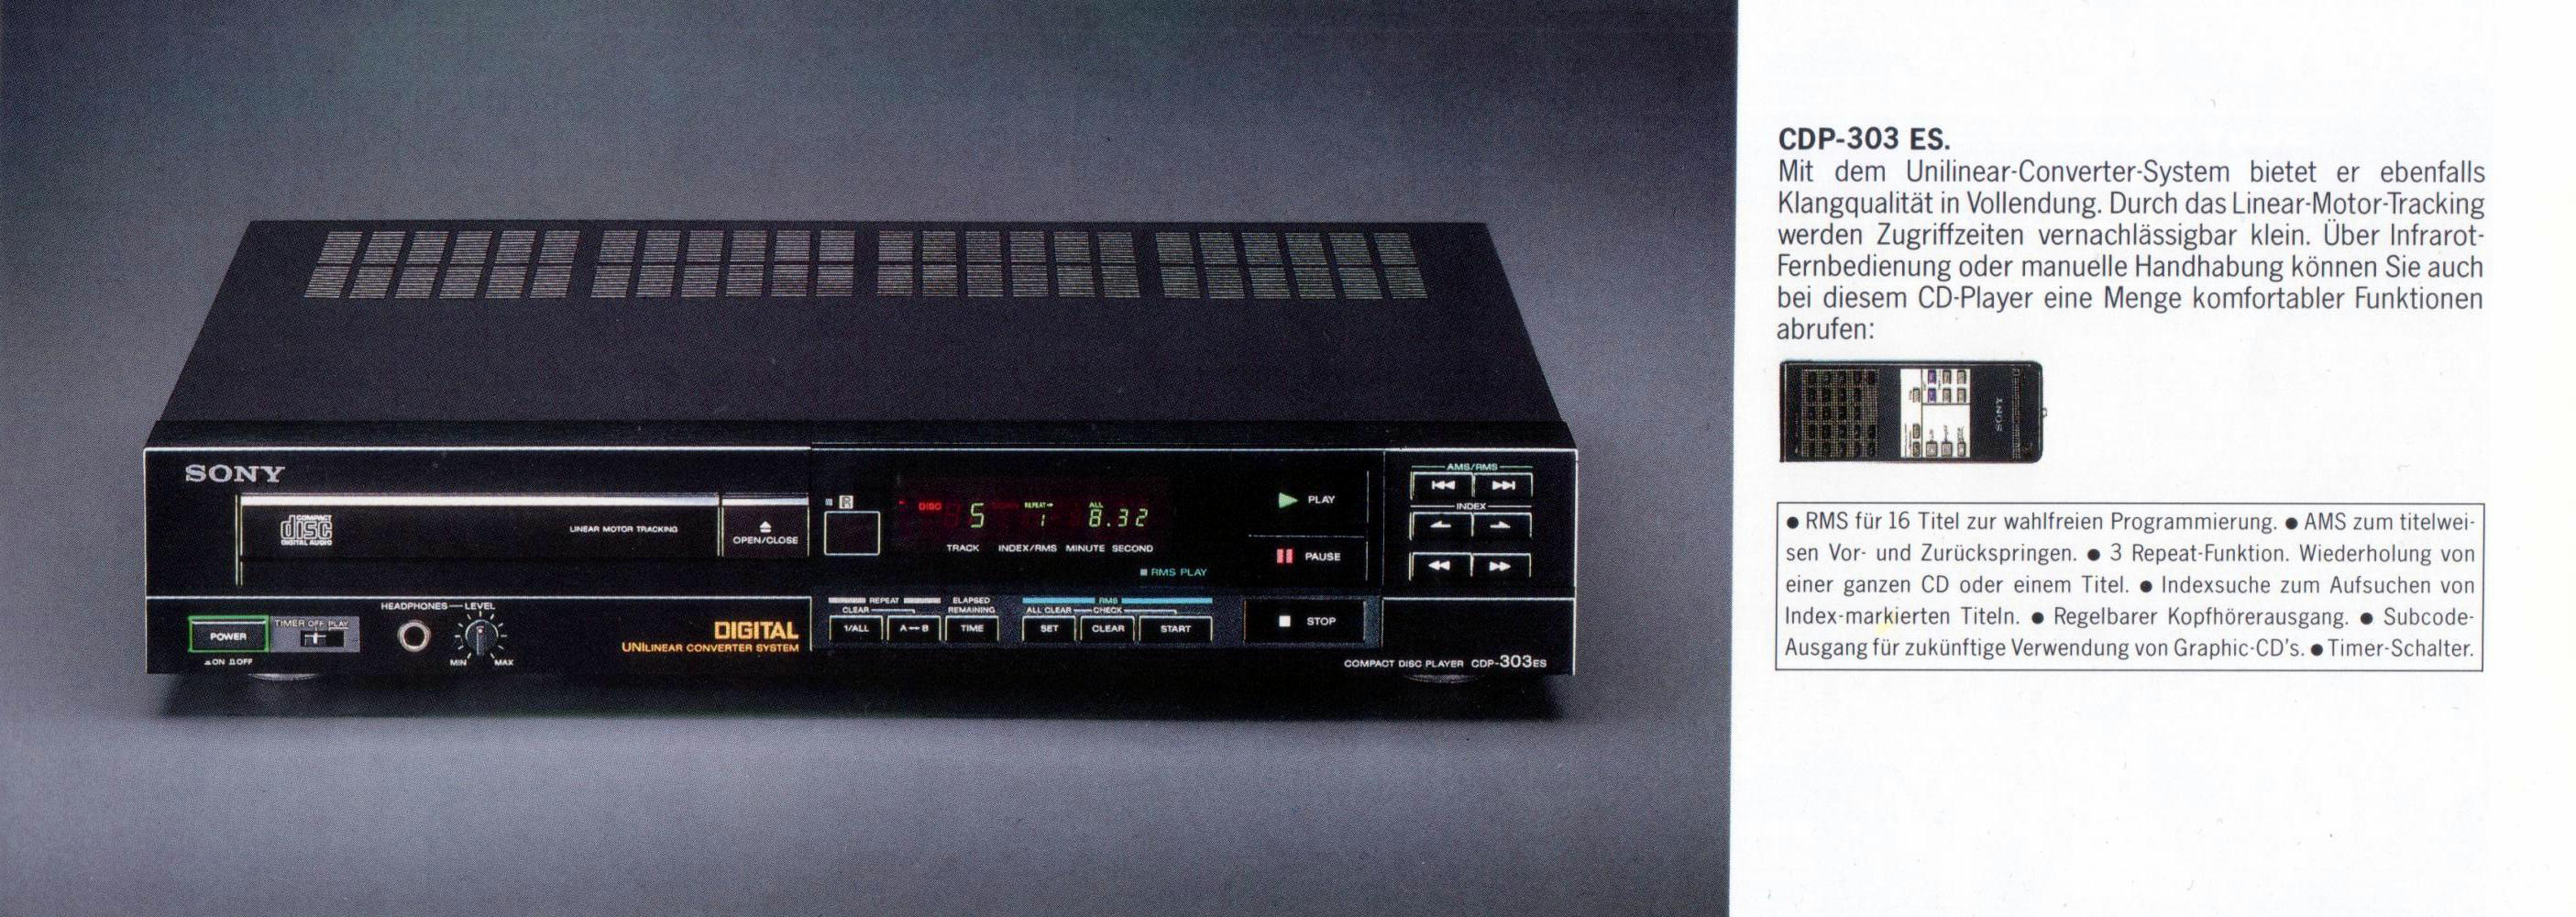 Sony CDP-303 ES-Prospekt-1987.jpg